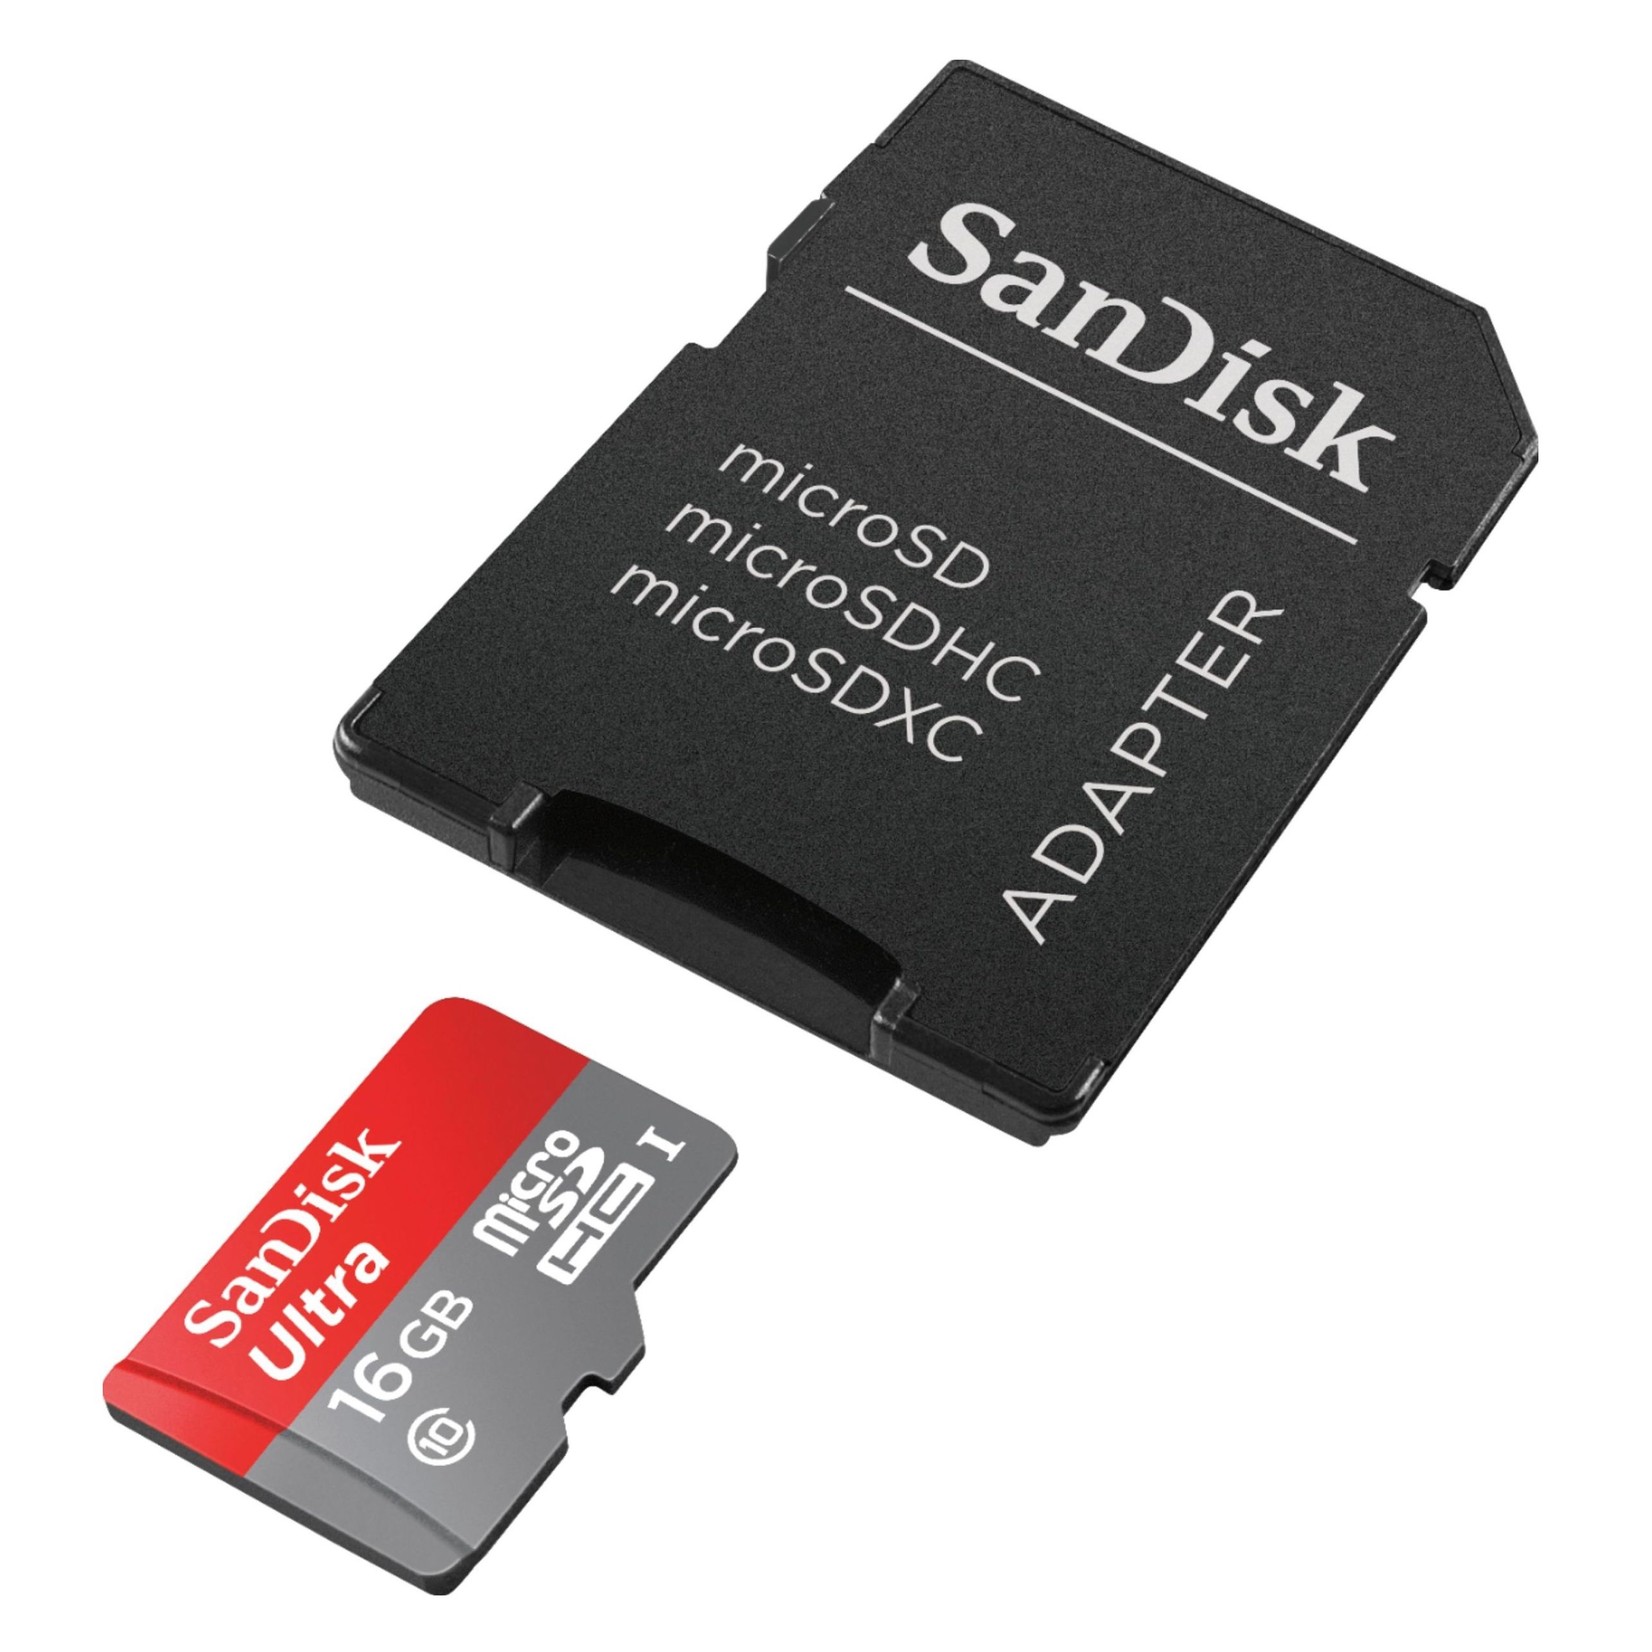 SanDisk SanDisk Ultra 16gb Class 10/UHS-I microSDHC